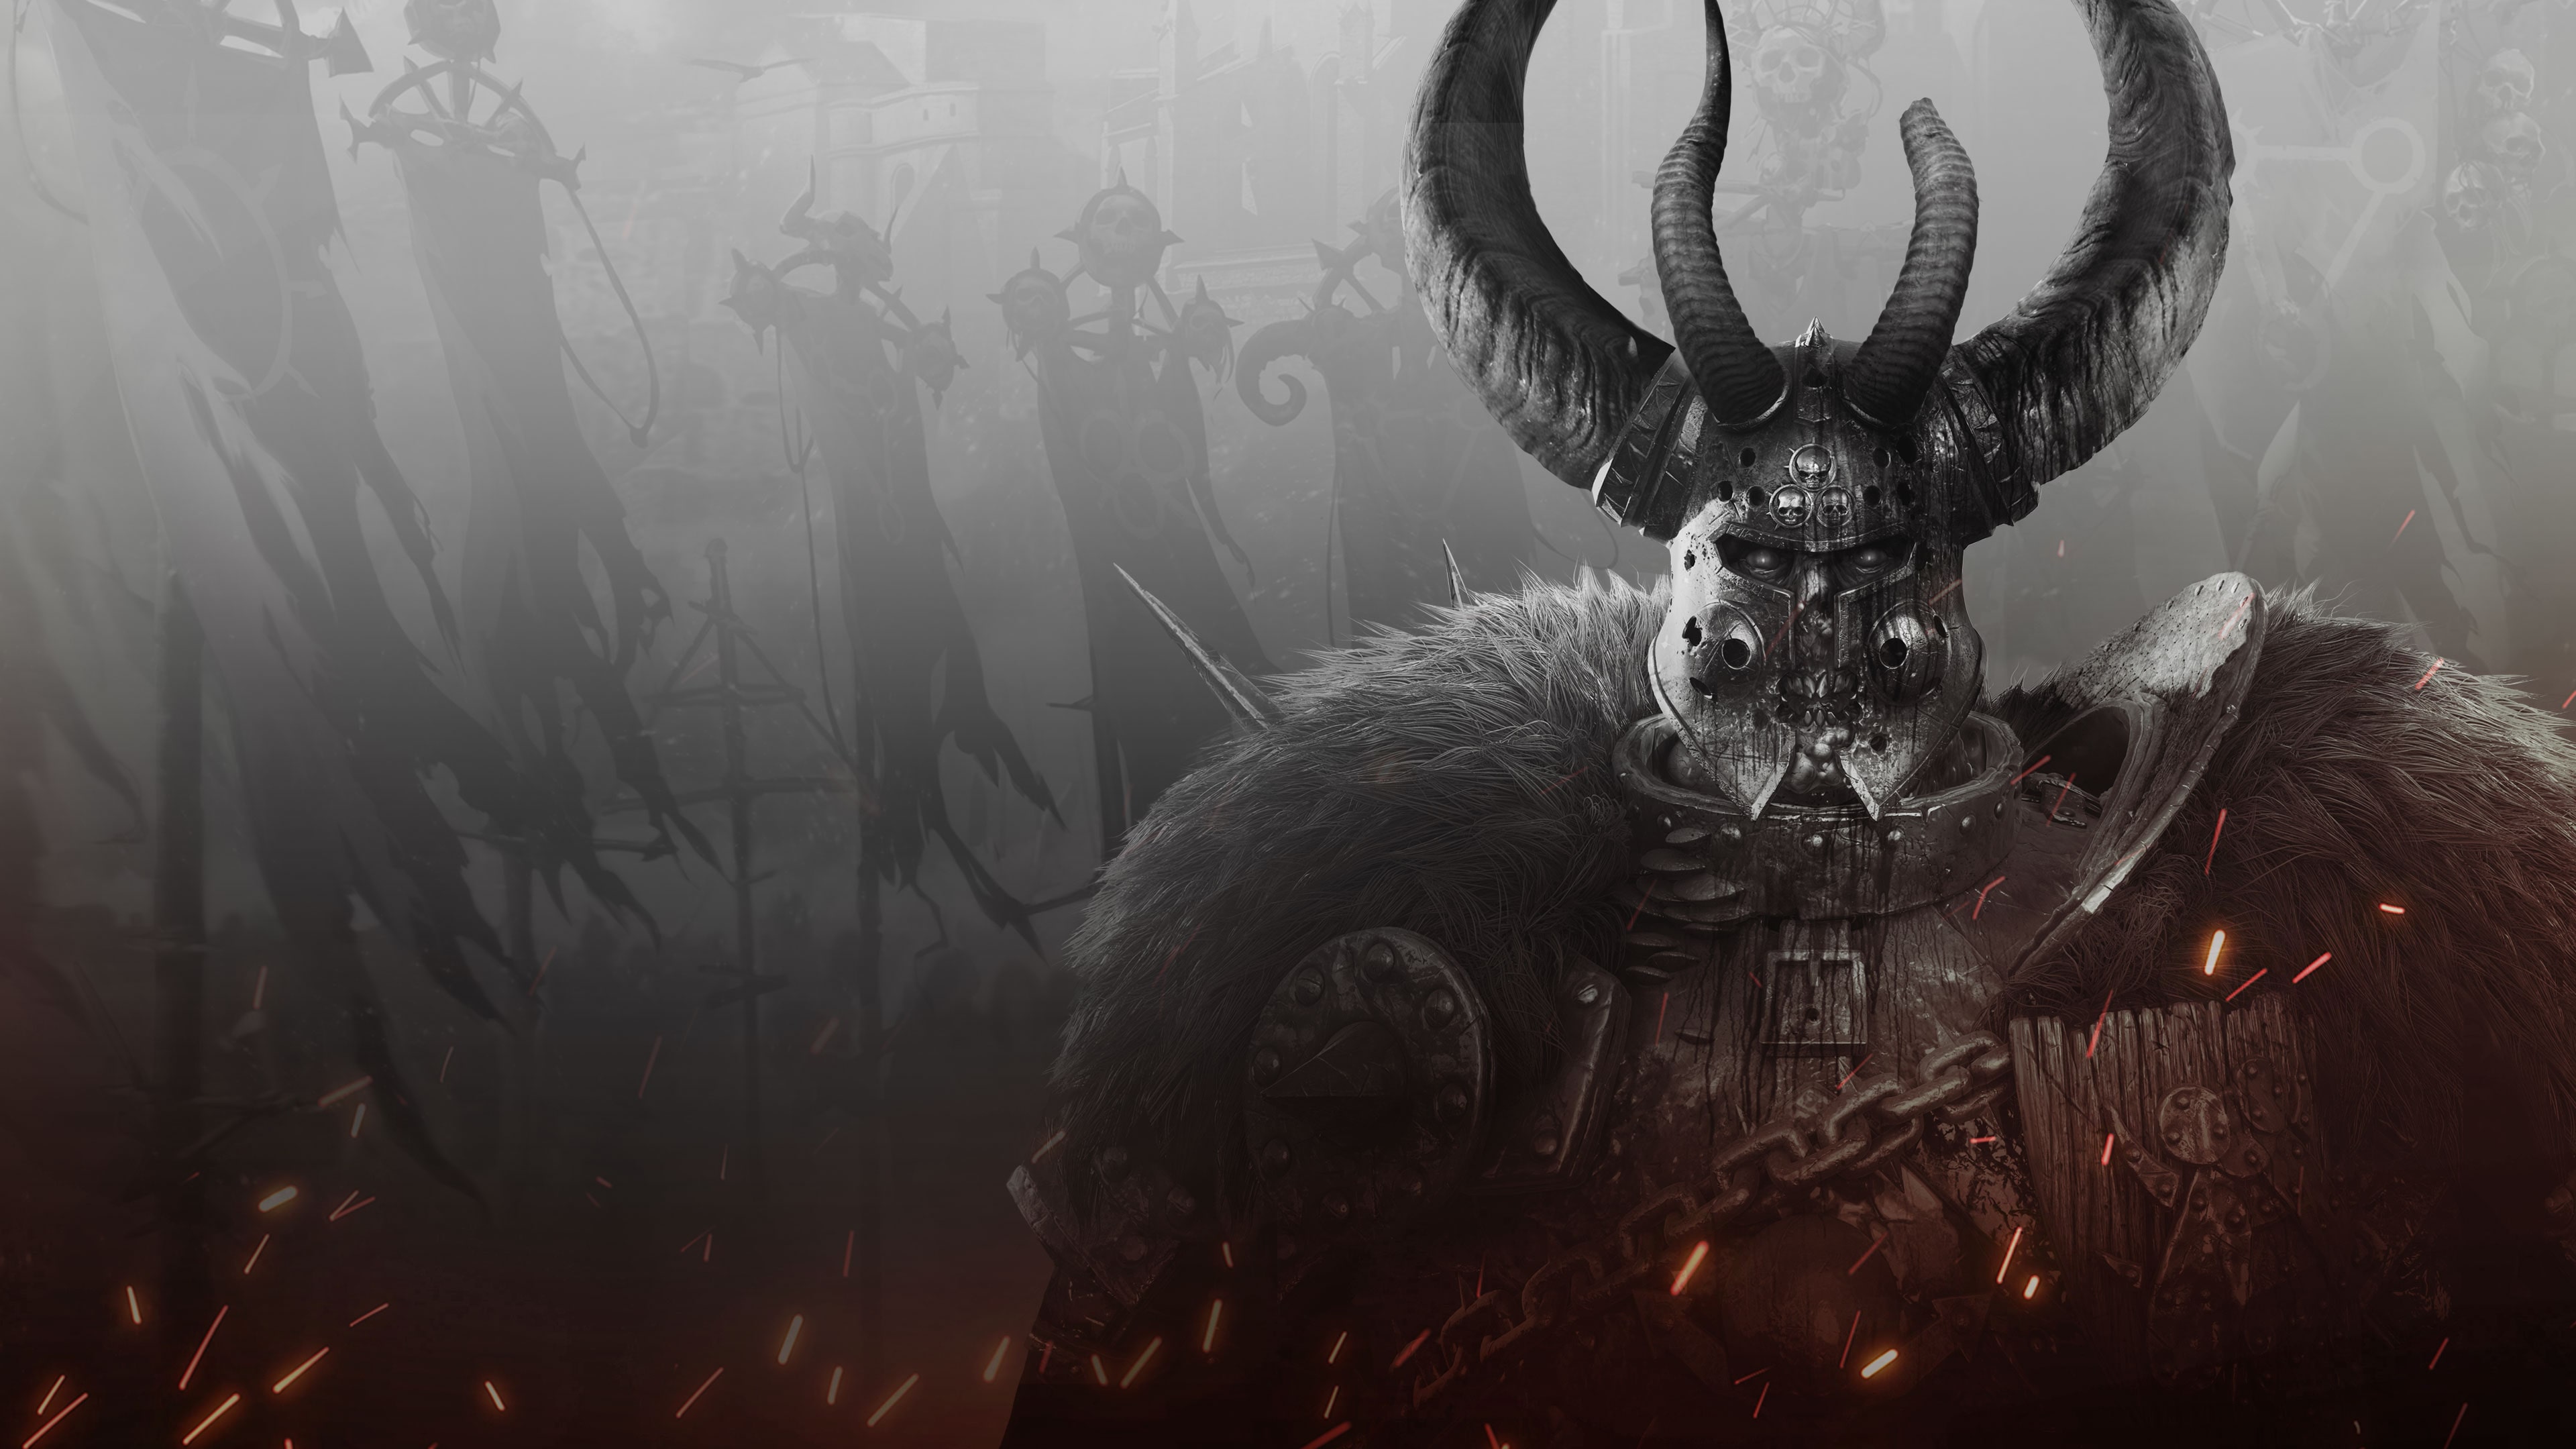 Warhammer: Vermintide 2 - Ultimate Edition Bundle